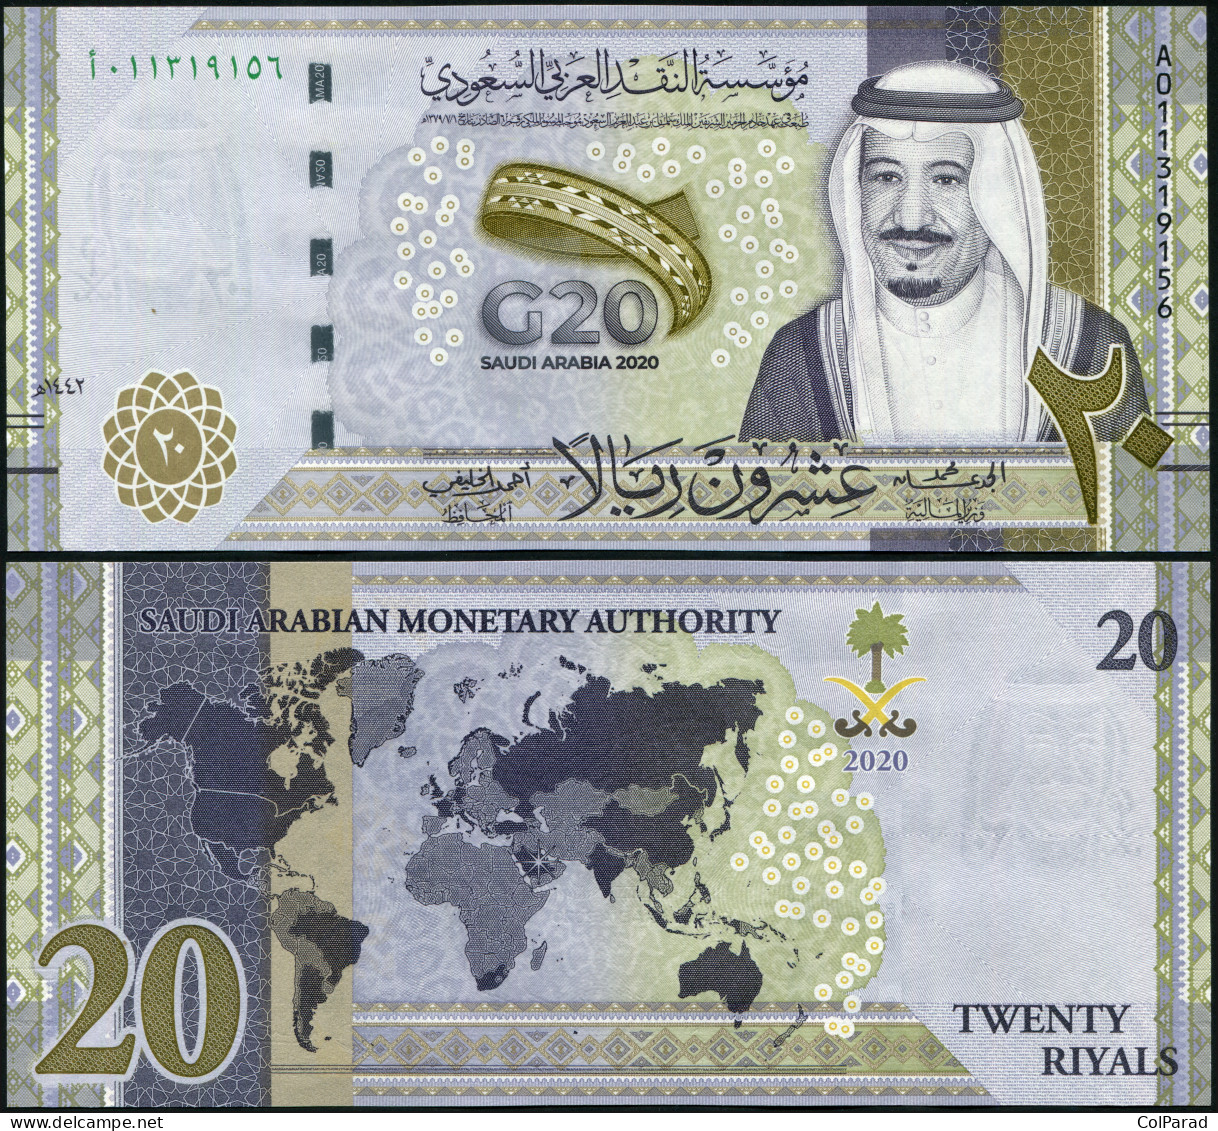 SAUDI ARABIA 20 RIYALS - 2020 - Paper Unc - P.NL Banknote - G20 Summit - Saudi-Arabien